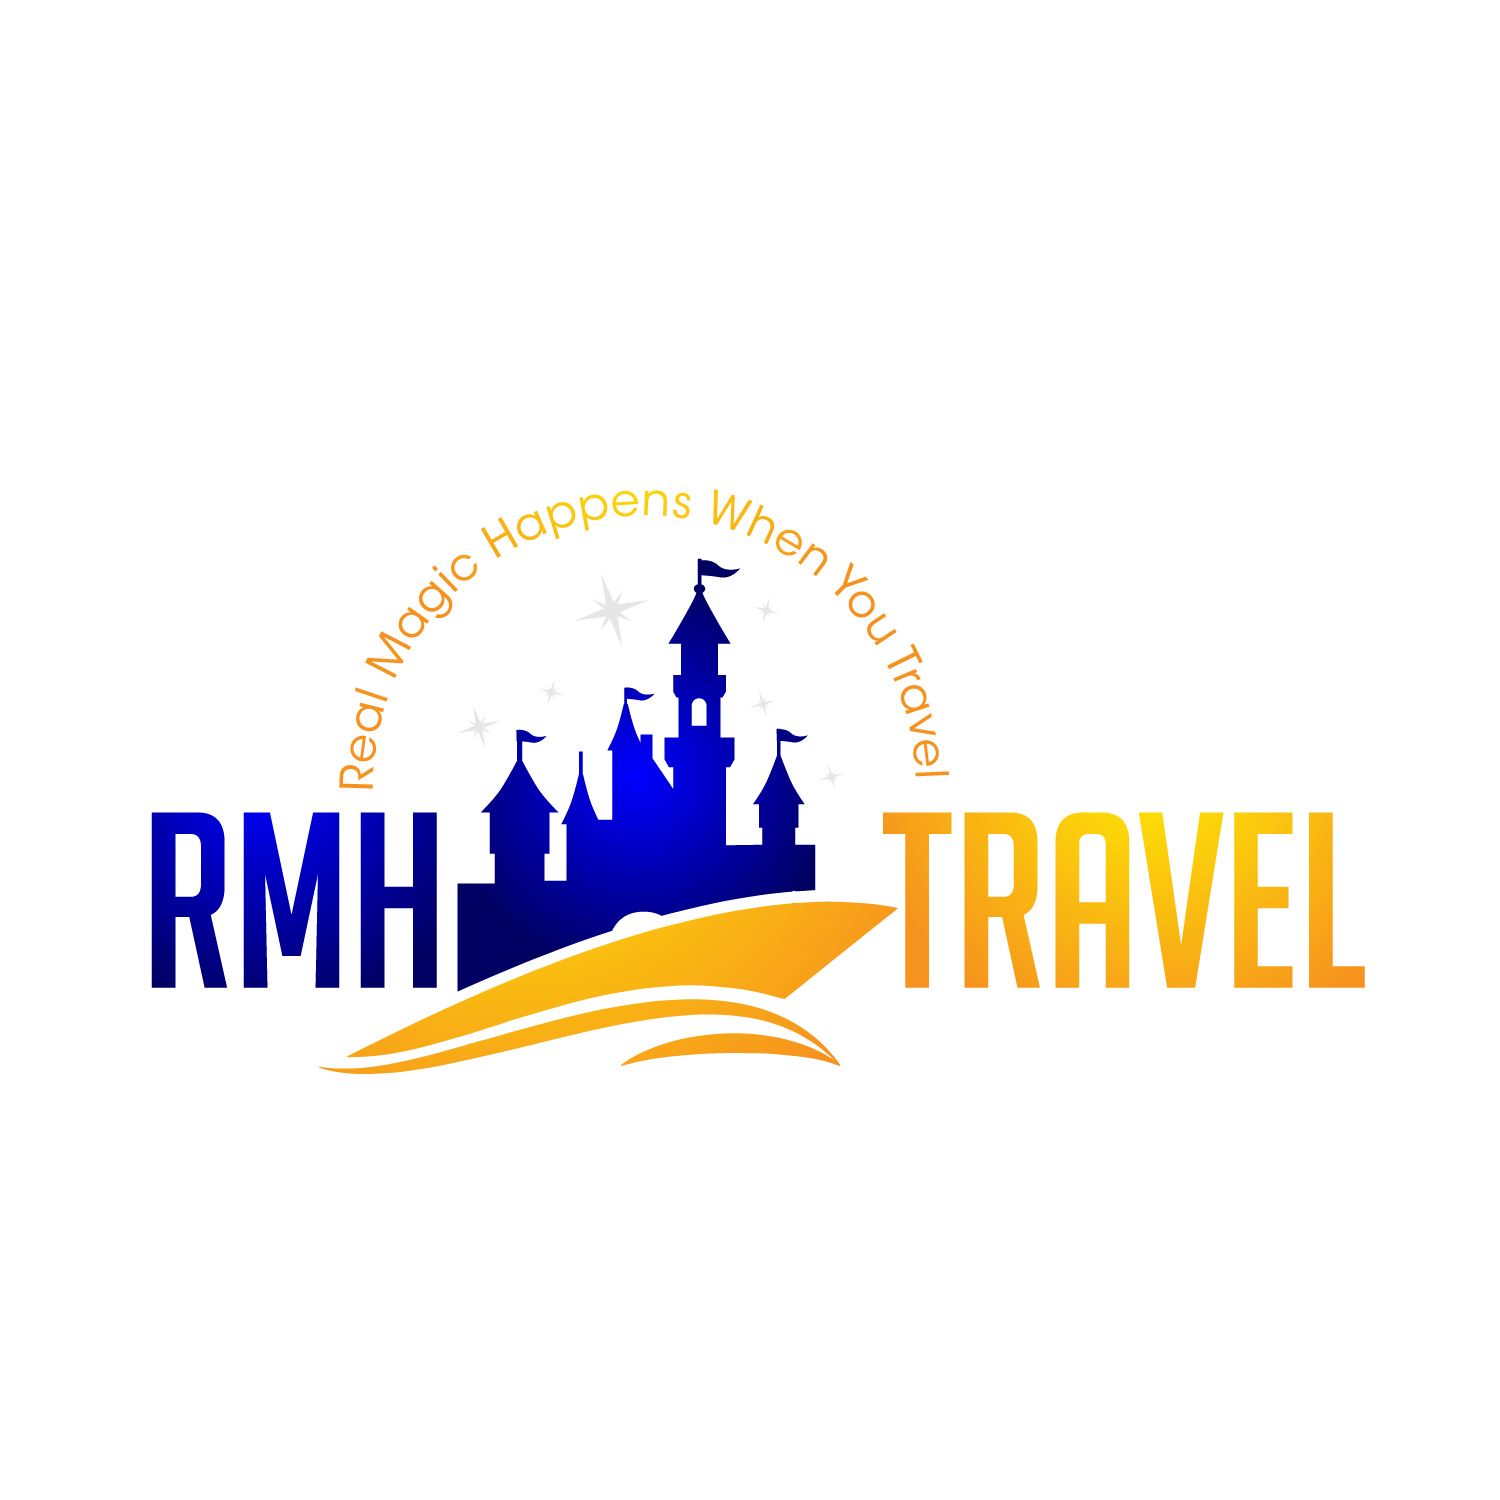 RMH Travel